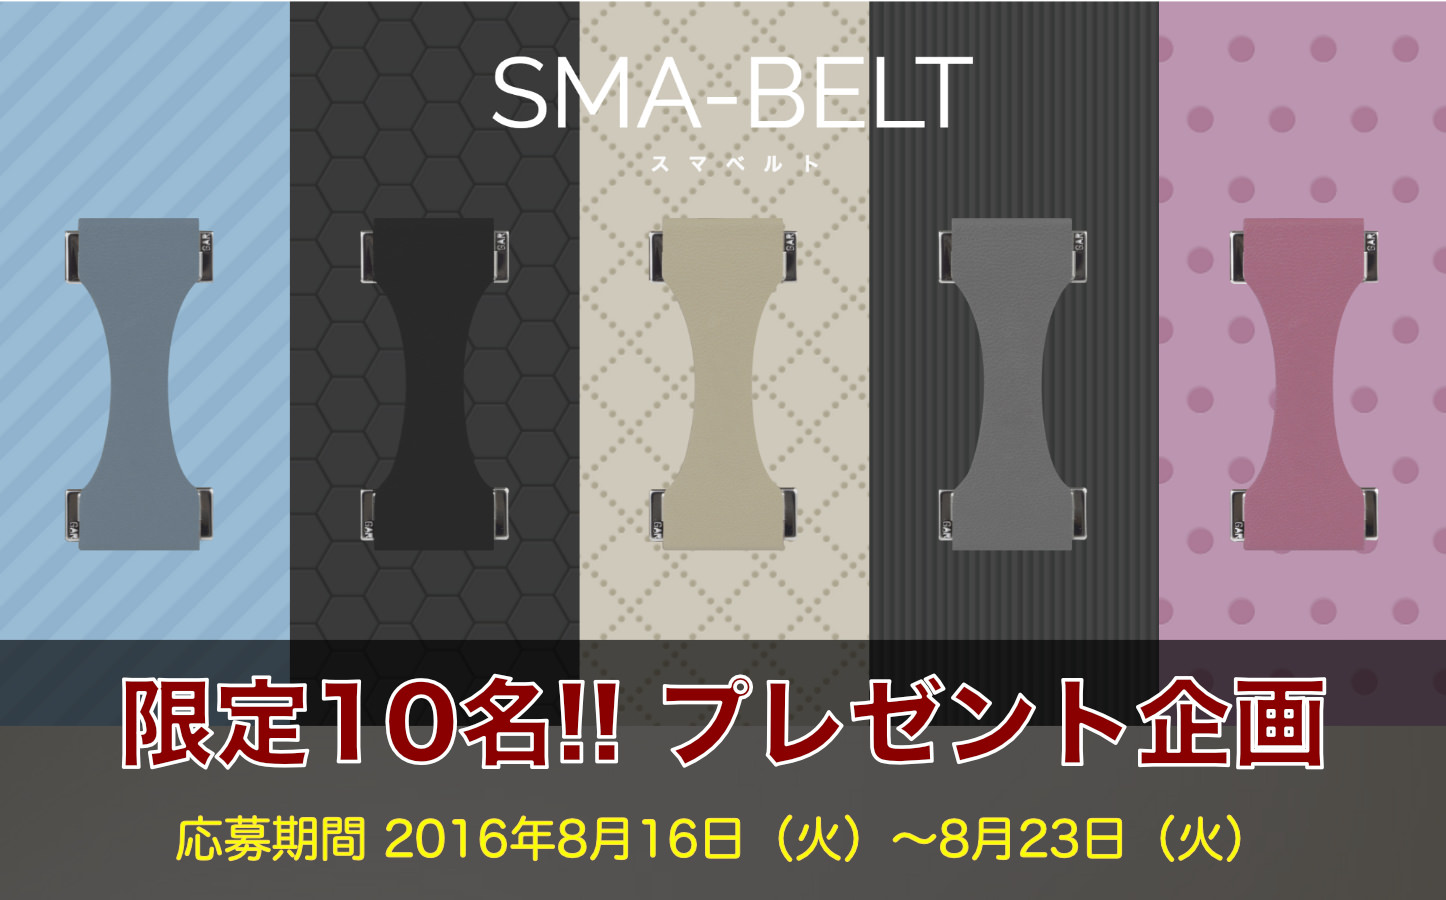 sma-belt-present-campaign.jpg